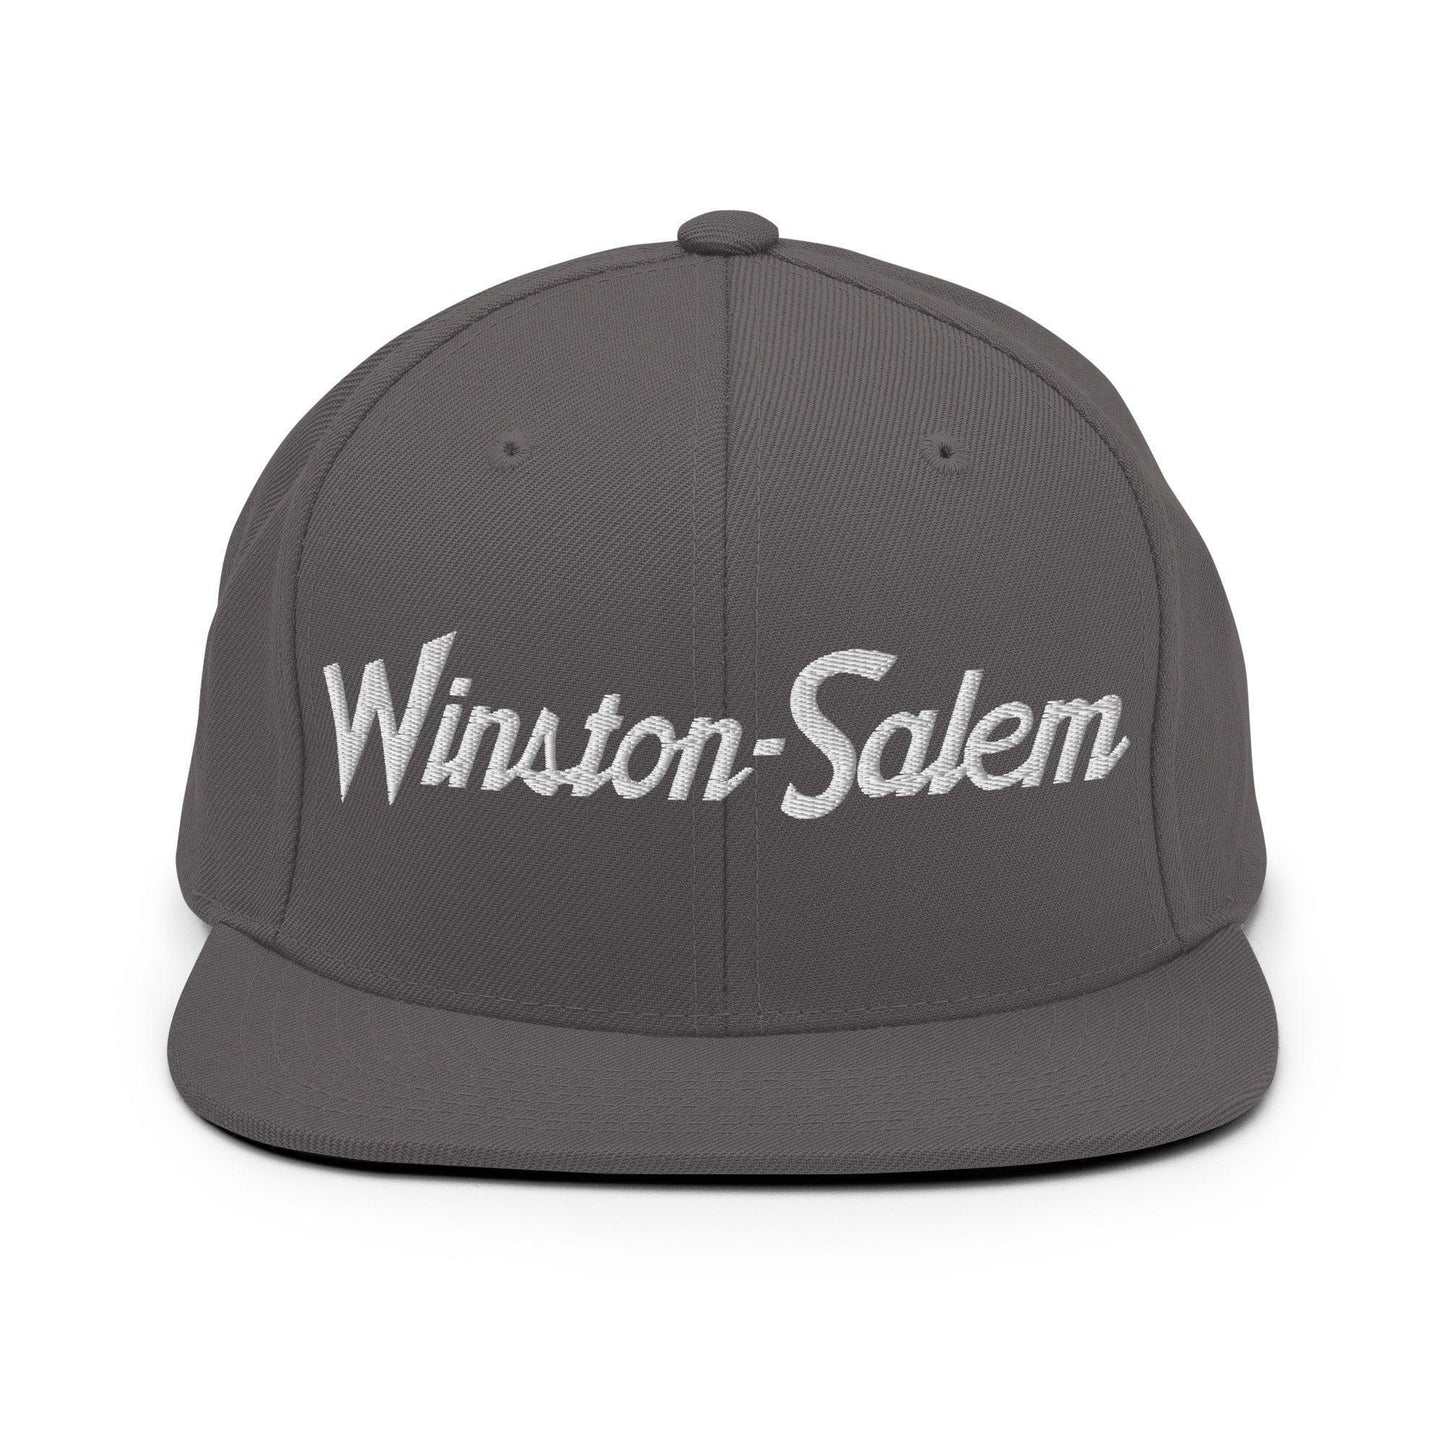 Winston-Salem Script Snapback Hat Dark Grey